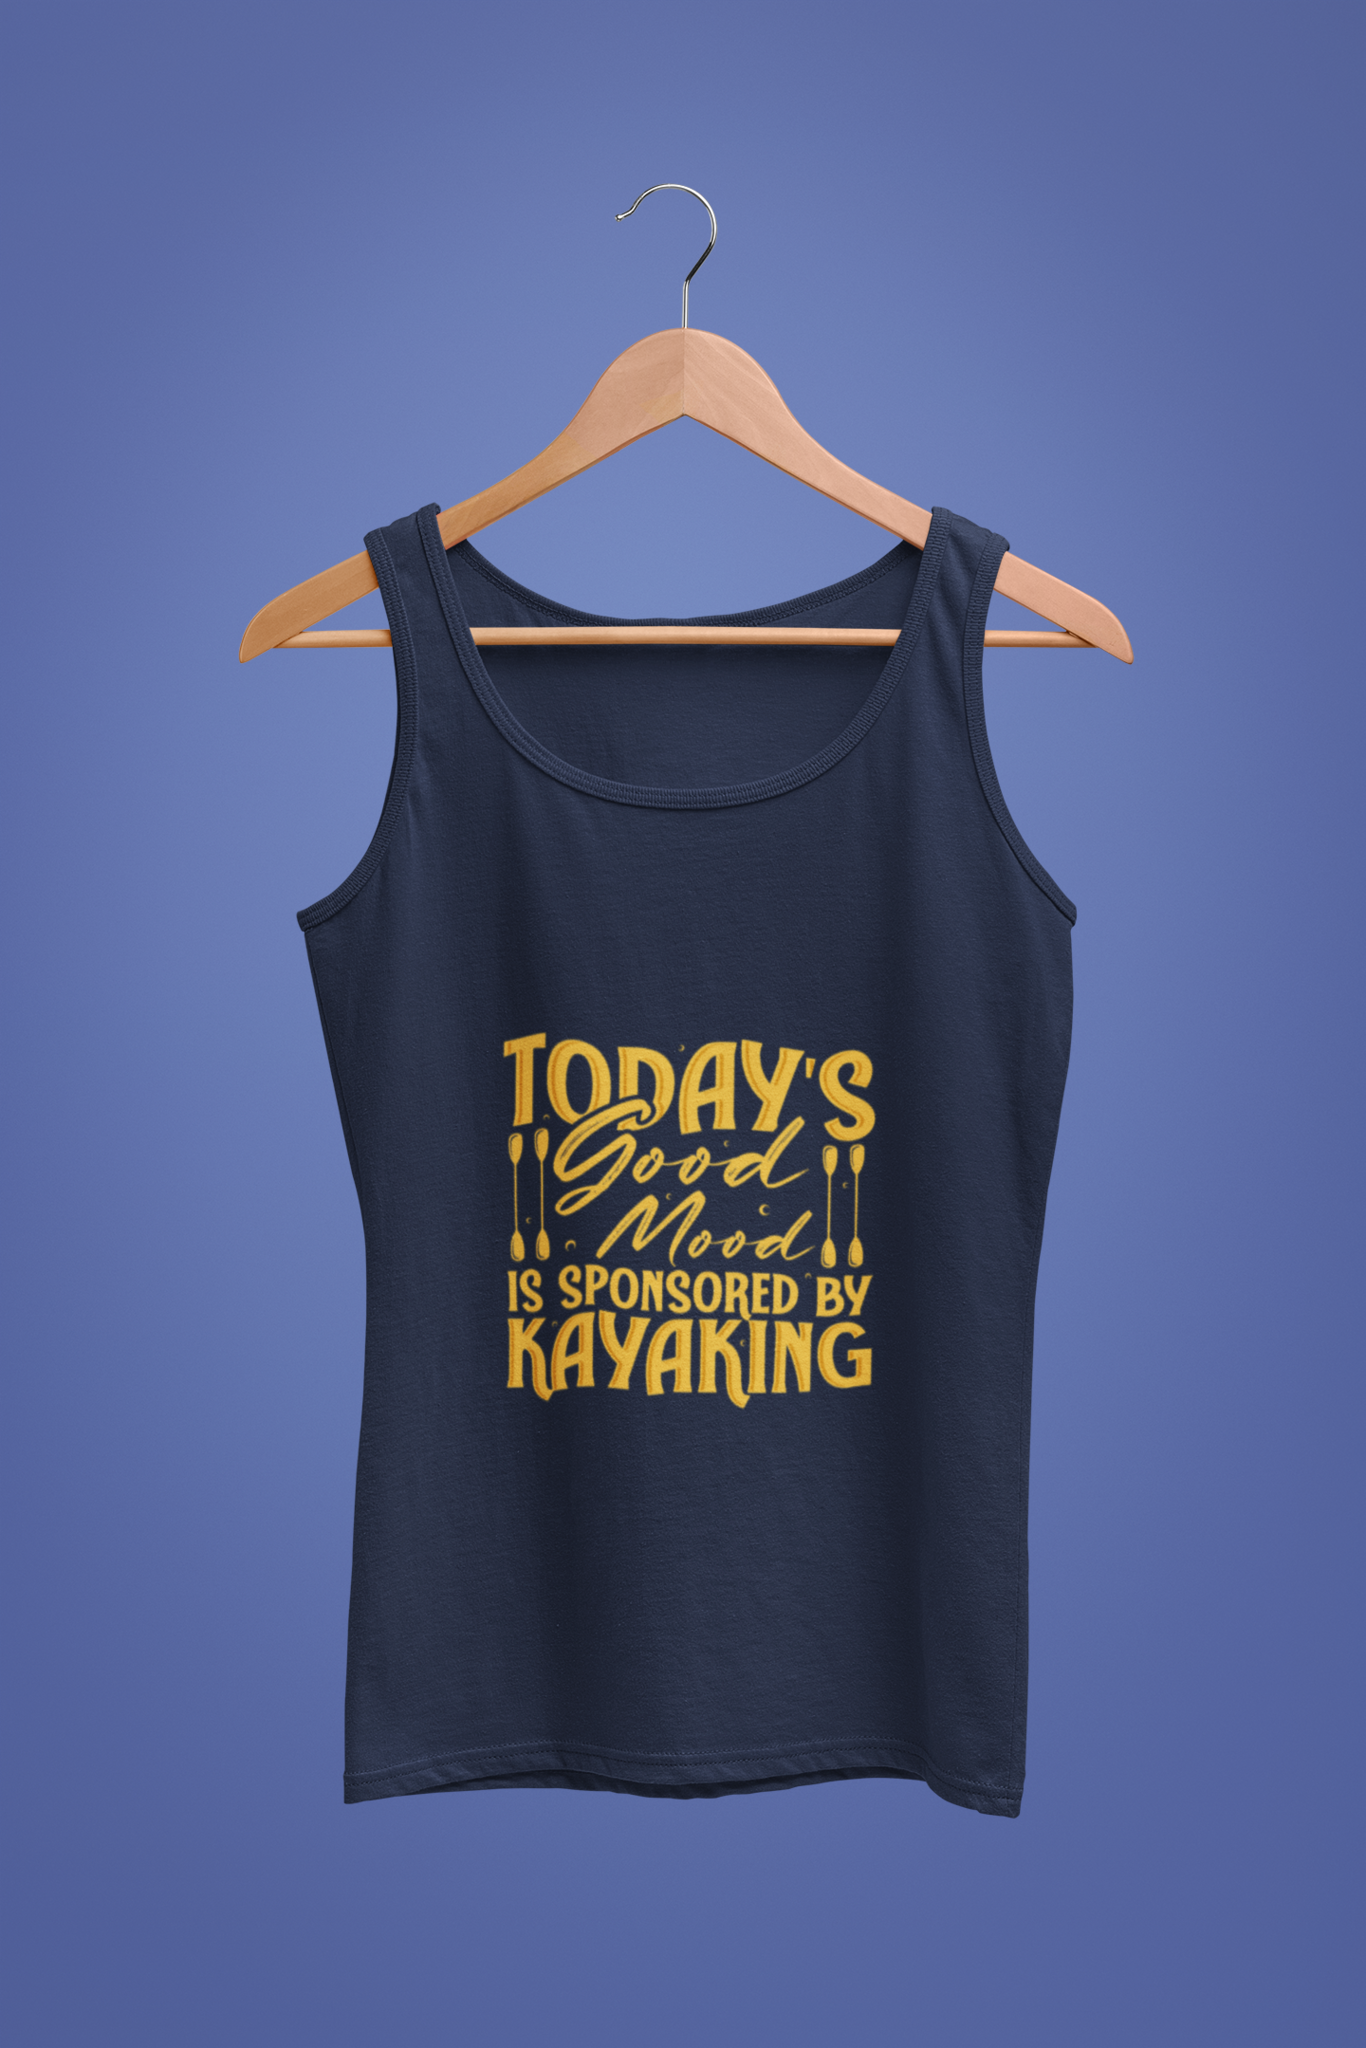 Women's Tank Top: Go Kayaking